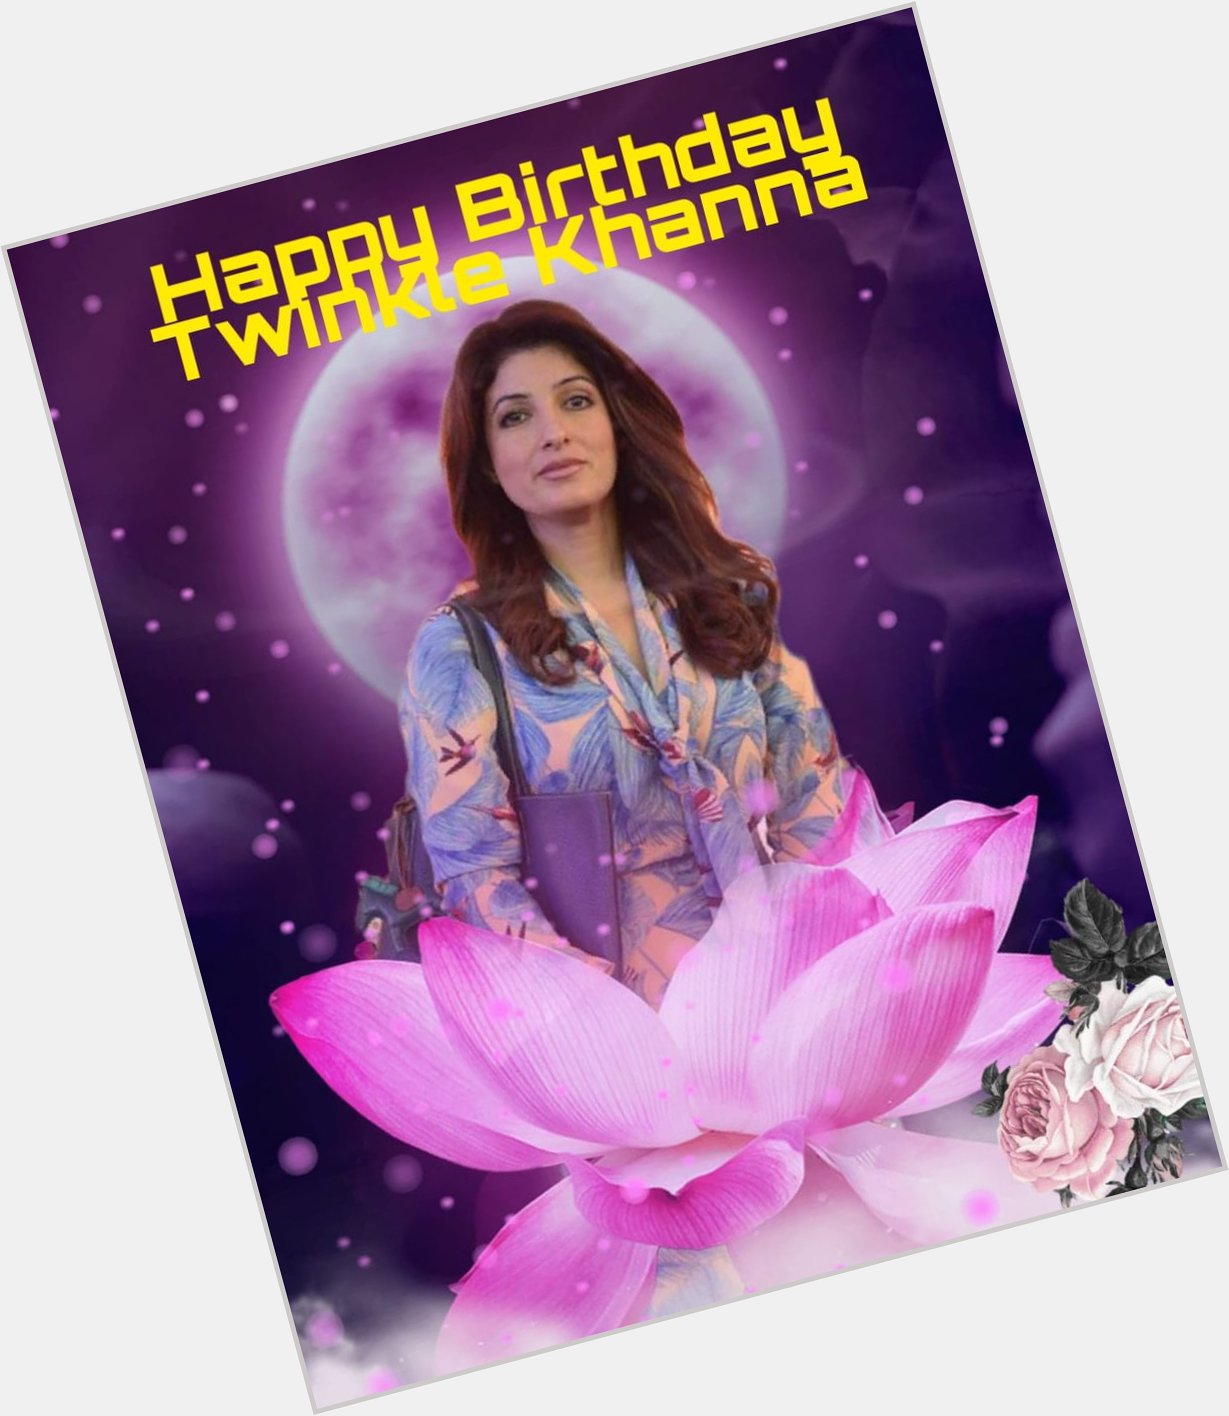 Happy Birthday Twinkle Khanna   